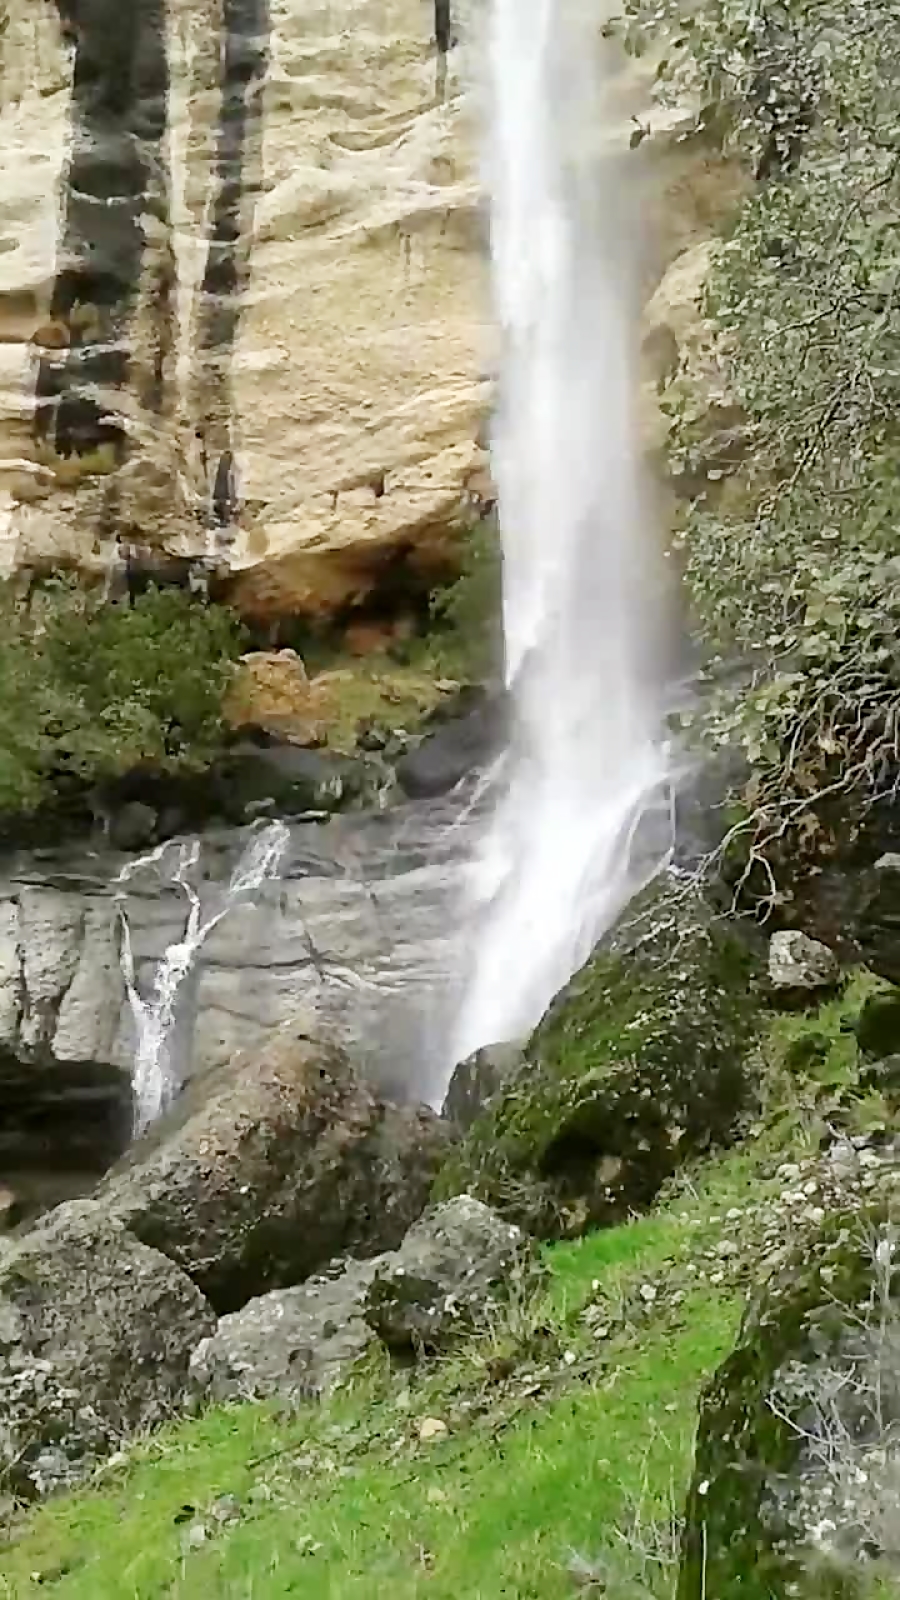 آبشار بابامنیر